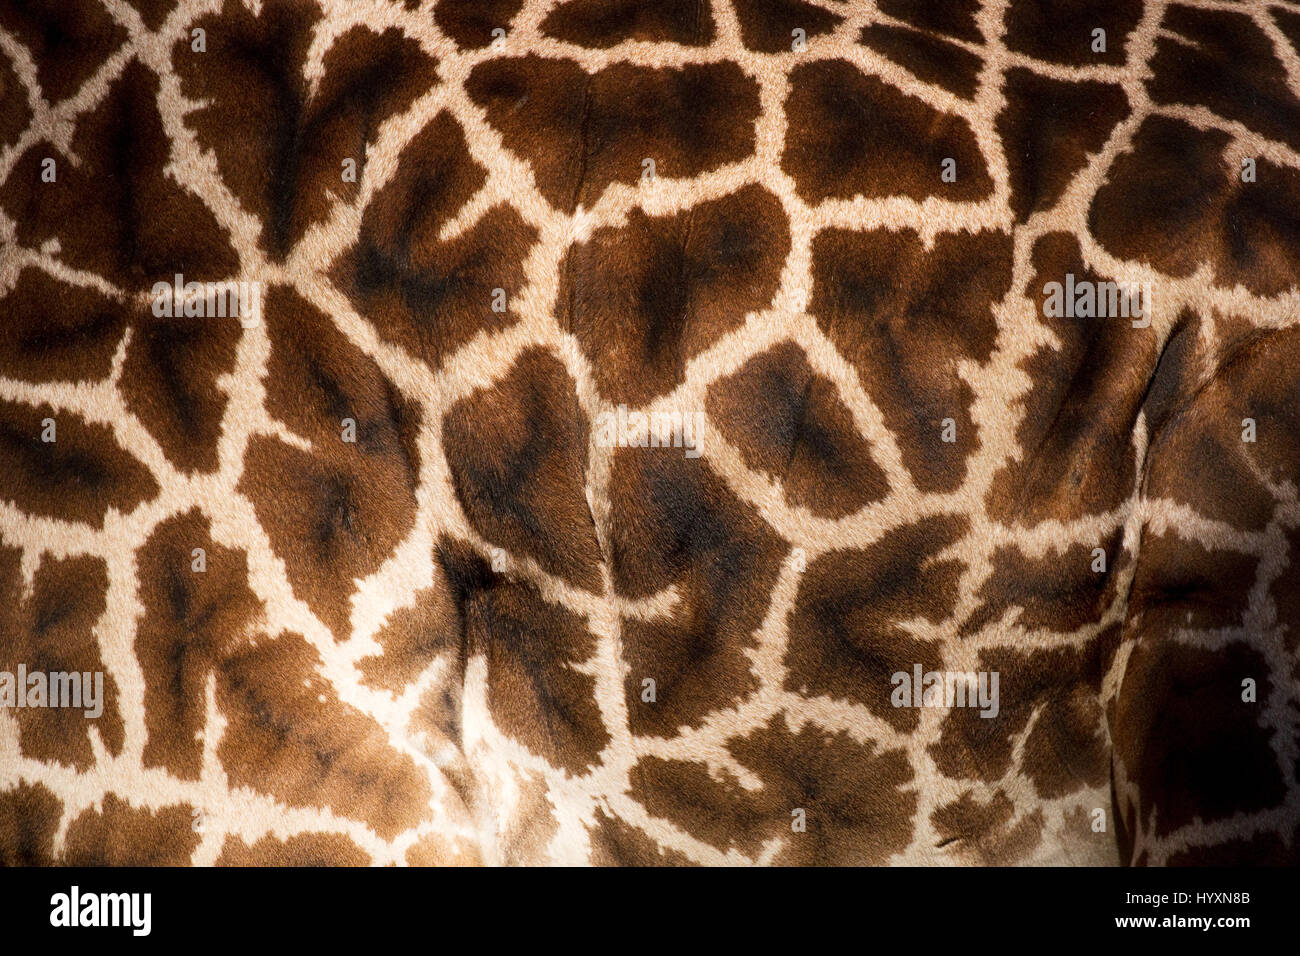 Girafe Masai en captivité - Banque D'Images